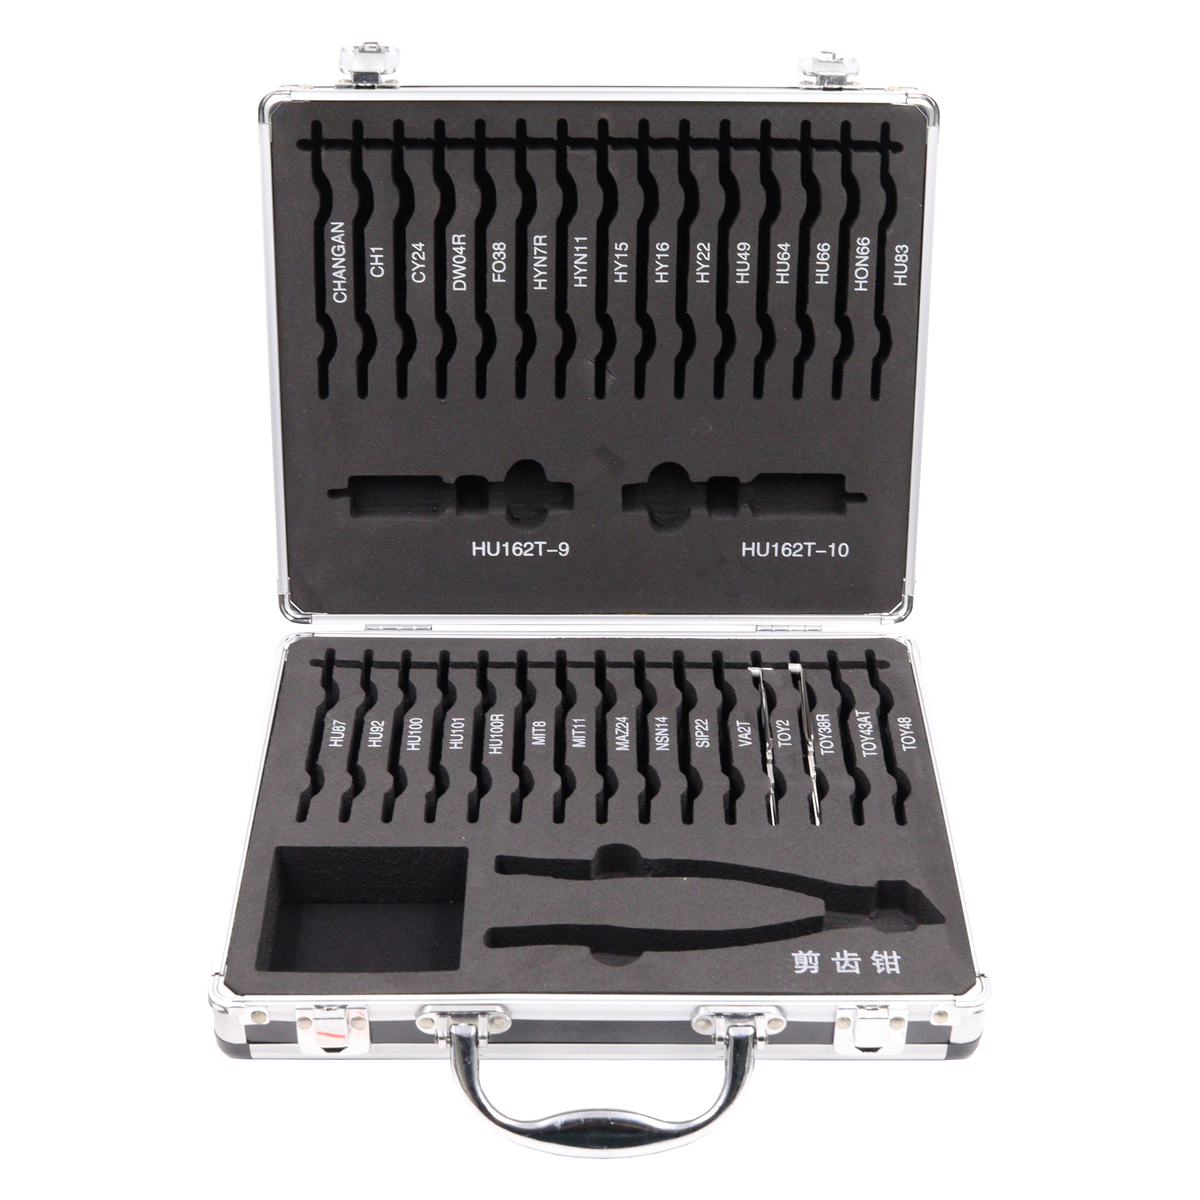 Original LISHI - Tool Box / Case For Holding 32 Lishi Tools 